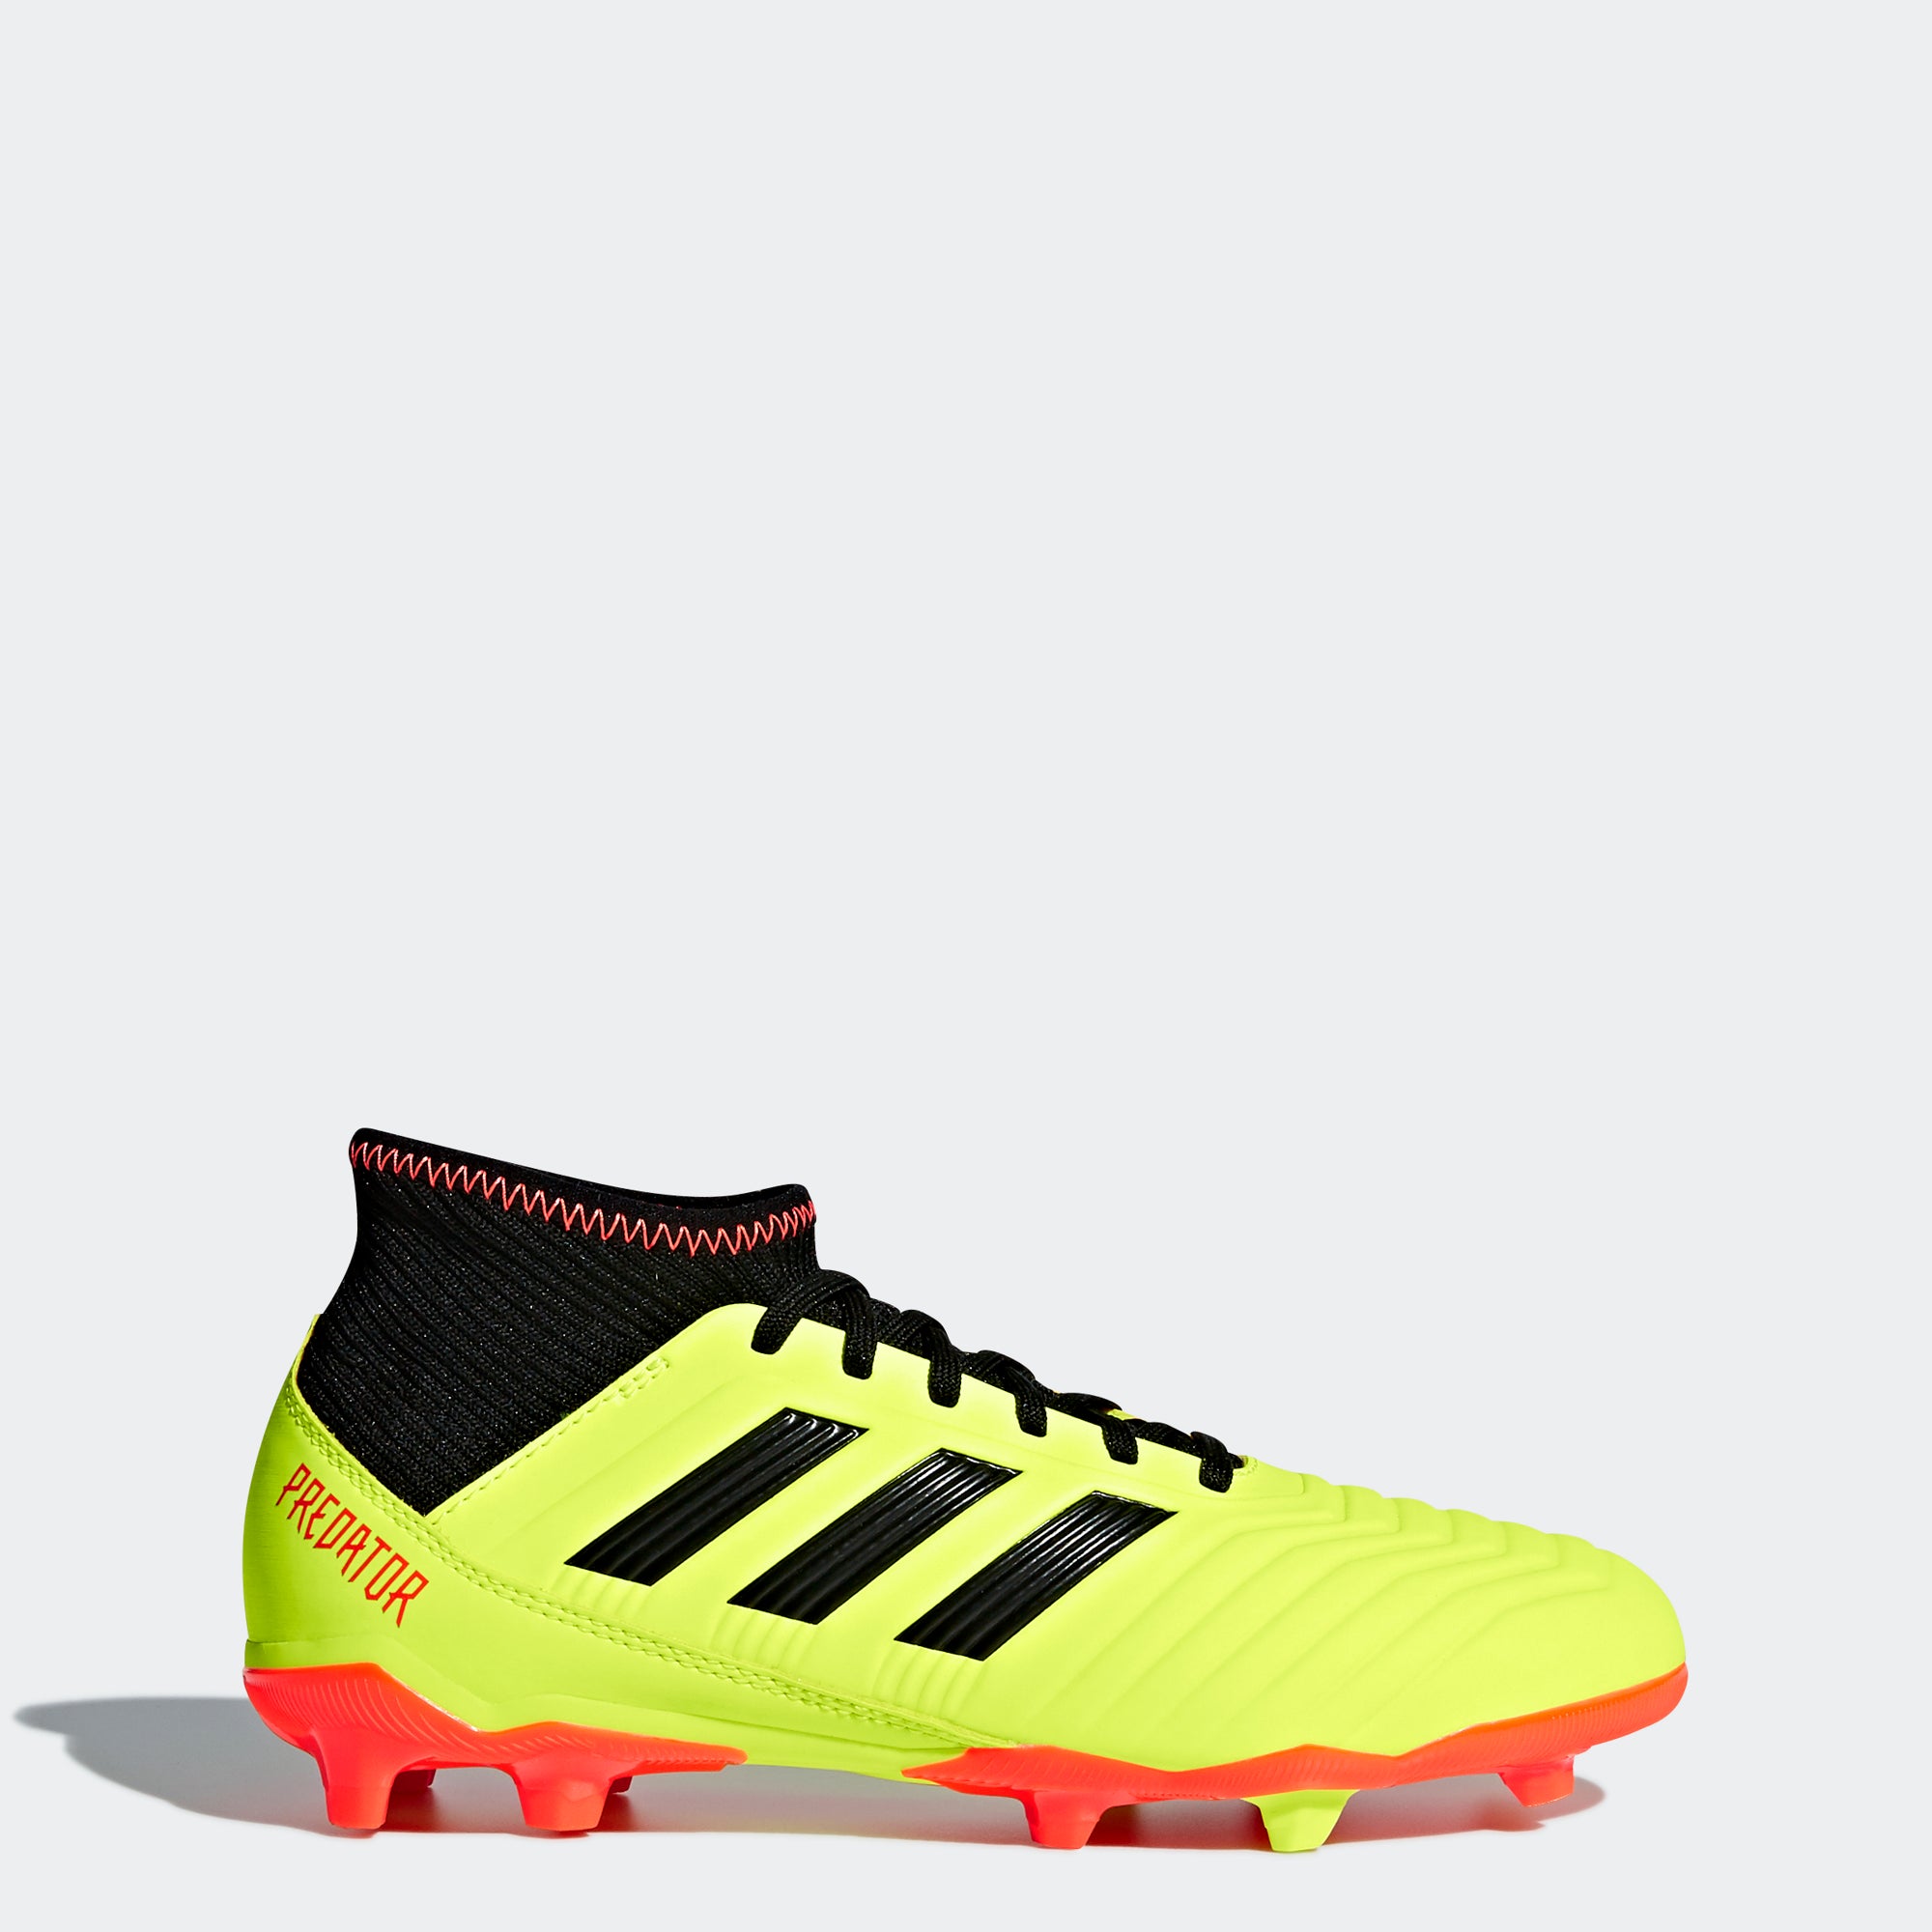 adidas predator 18.3 football boots